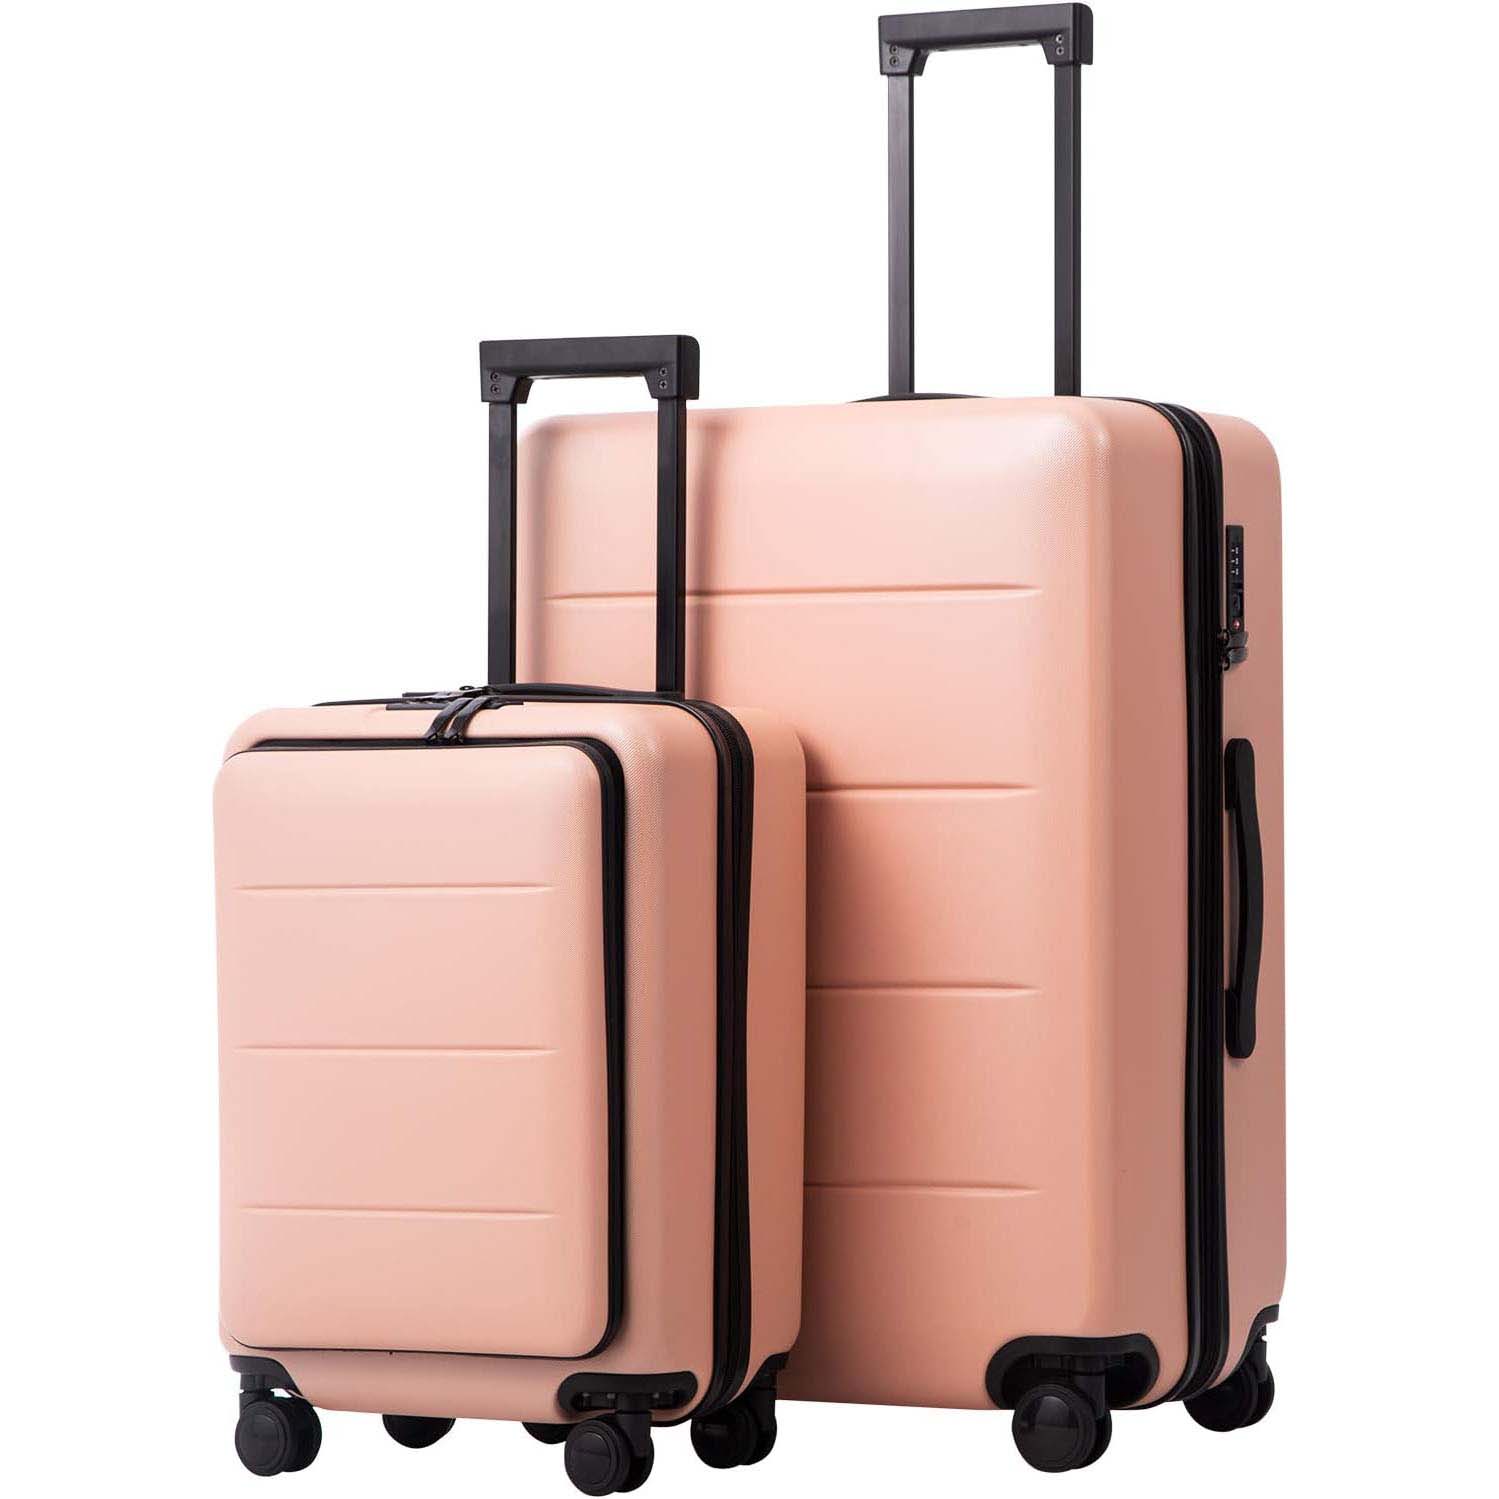 coolife 2 piece luggage set